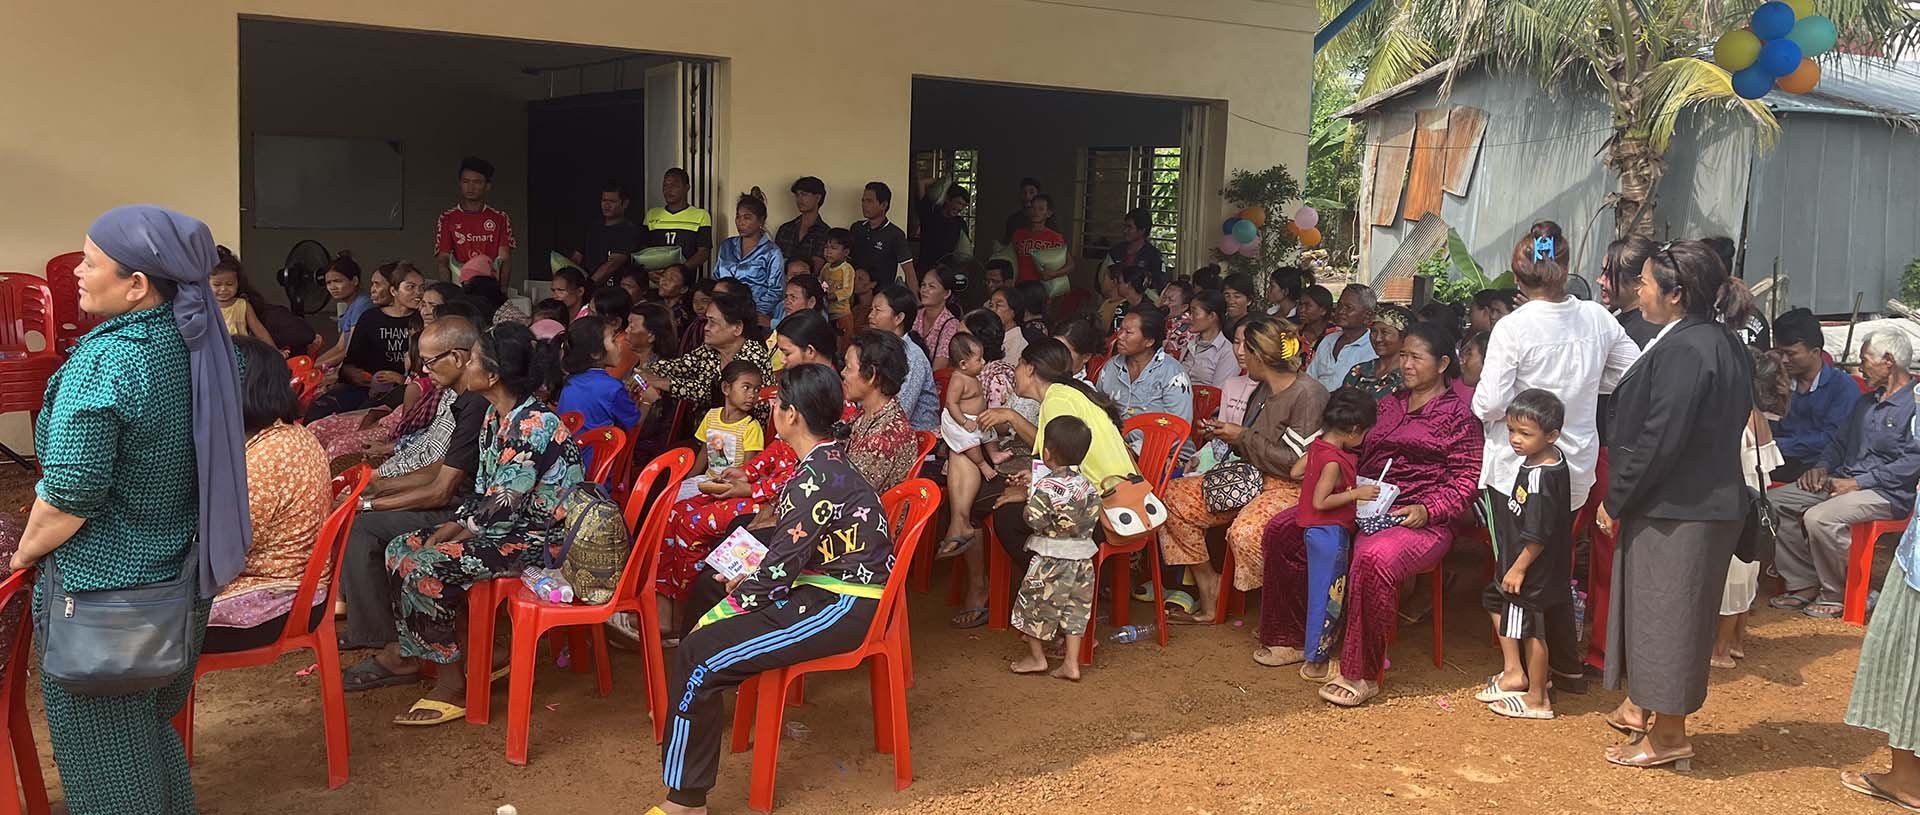 Cambodia Mission School Dedication 4.jpg